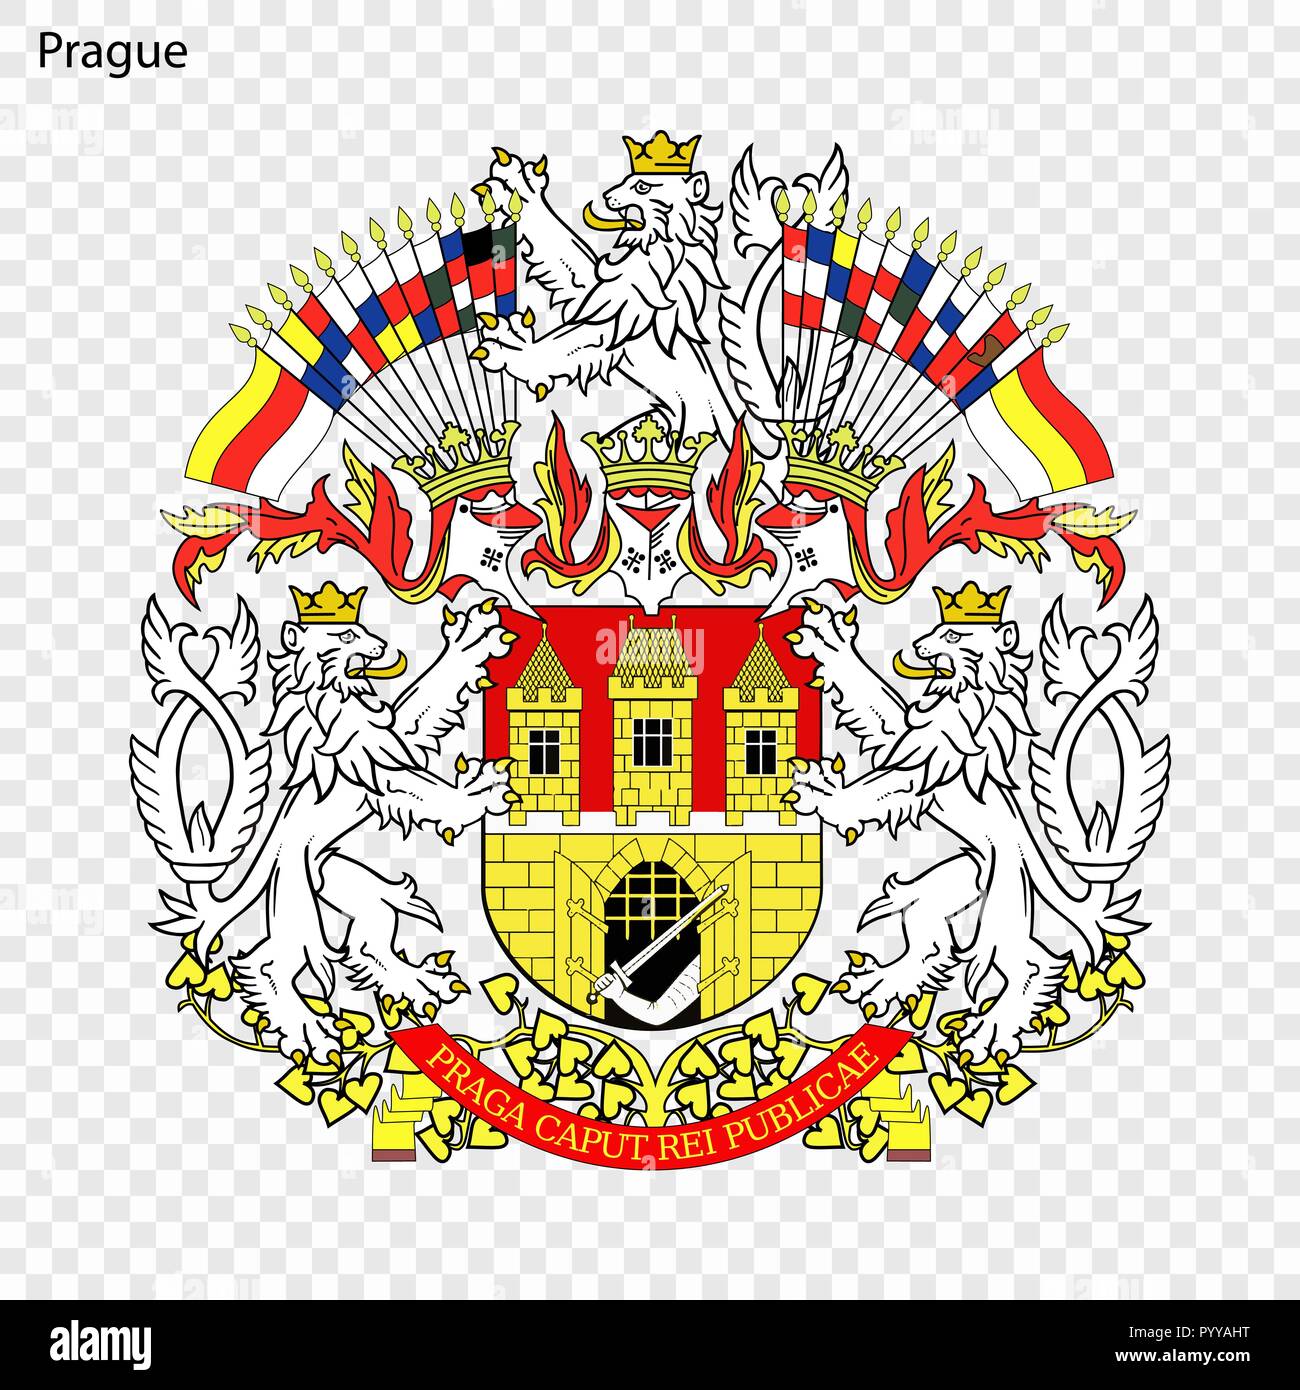 Emblem of Prague. City of Czech Republic. Vector illustration Stock Vector